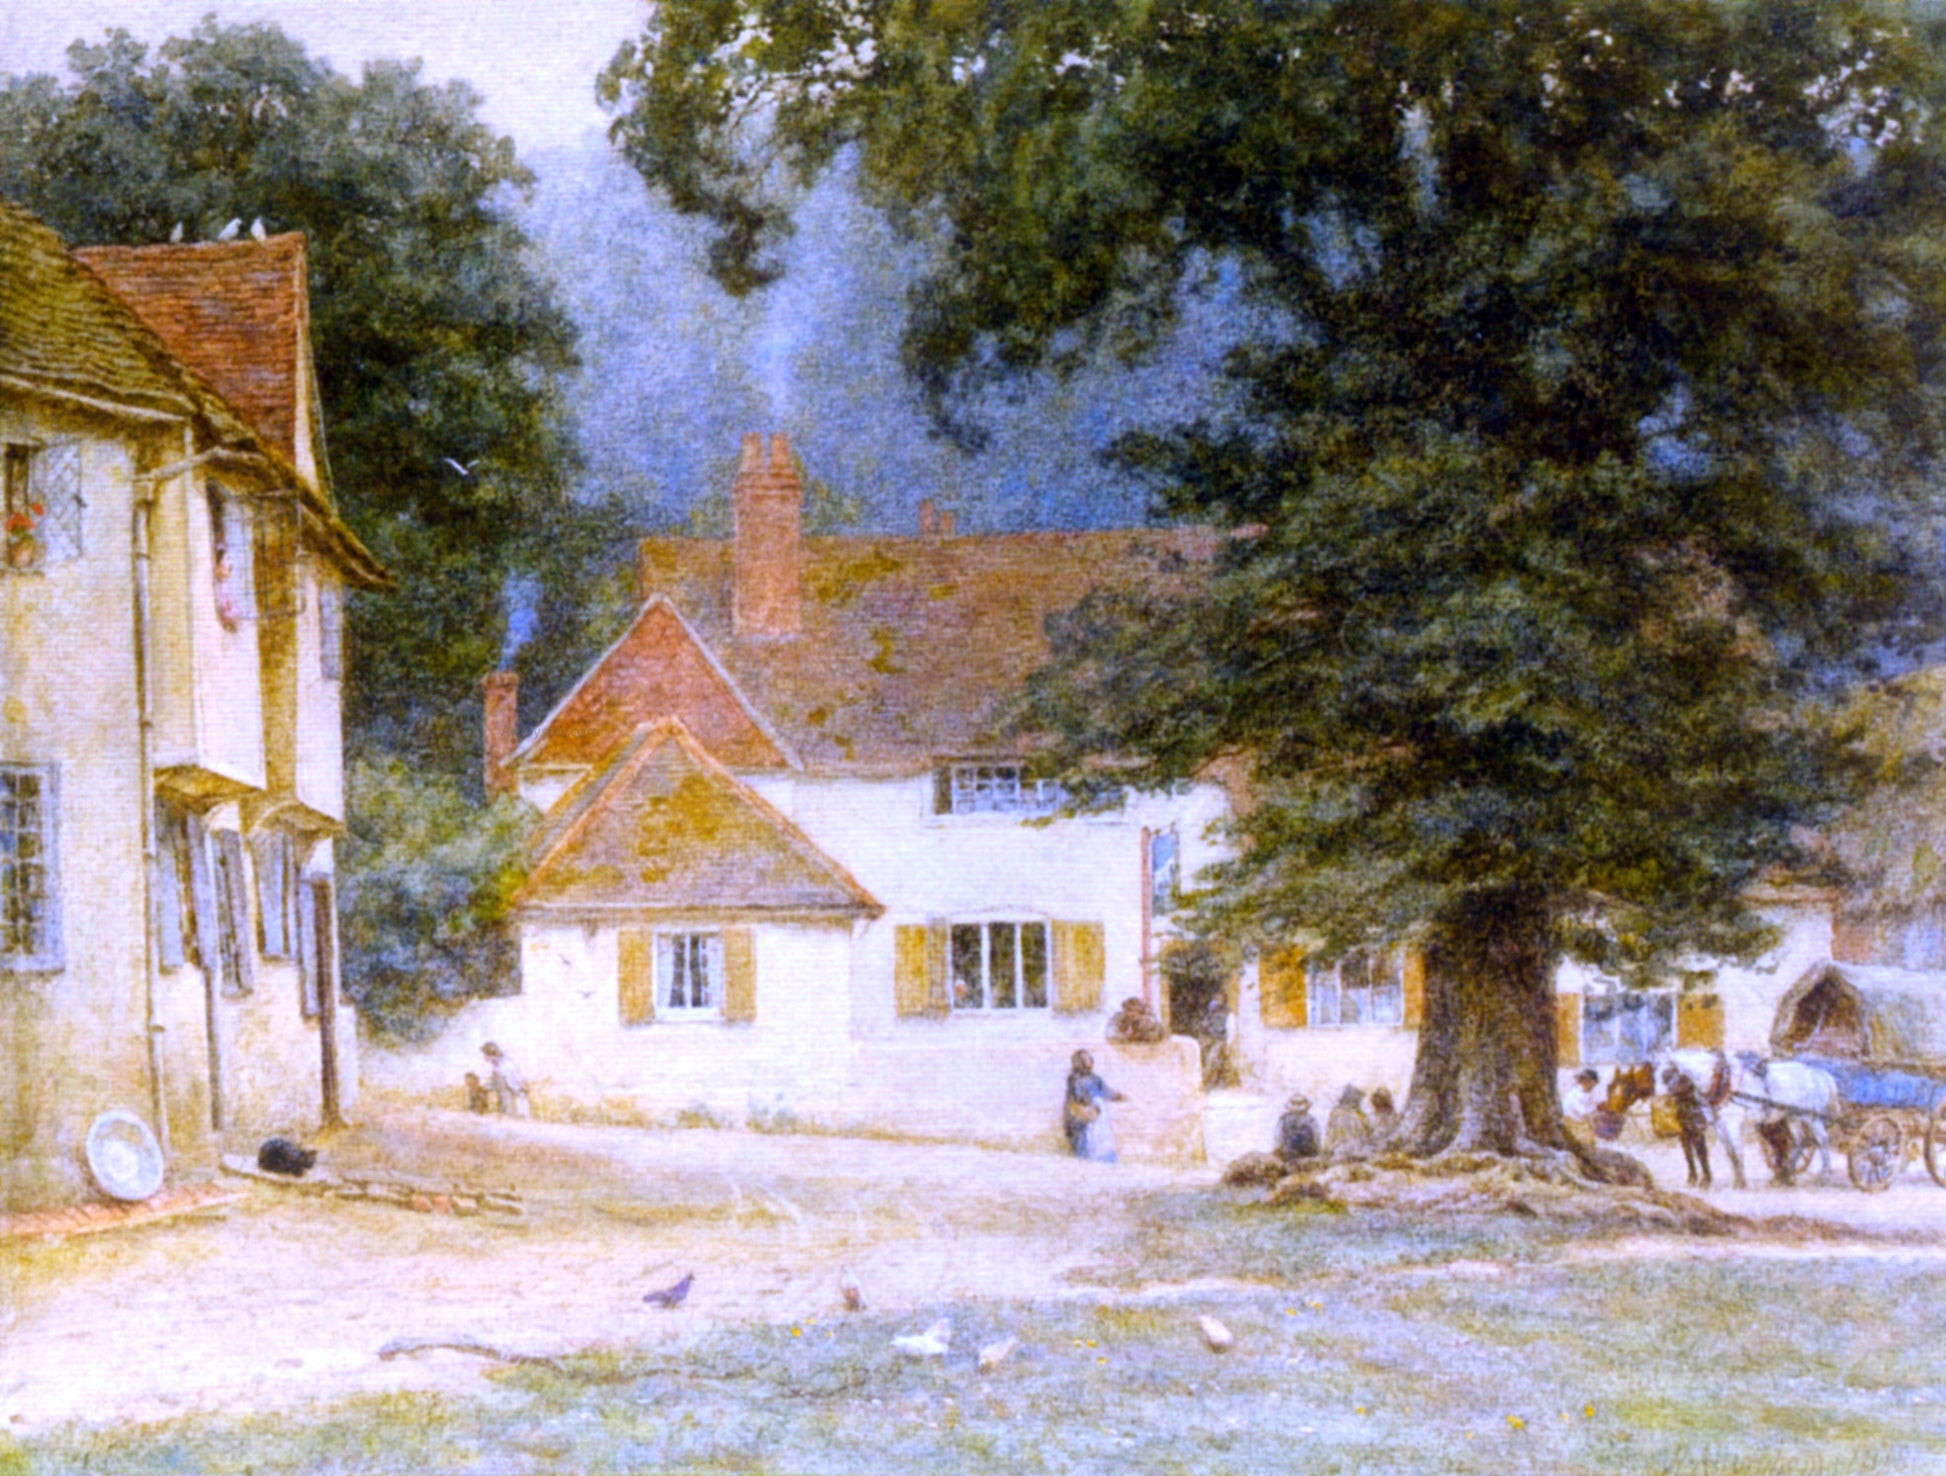  Helen Allingham RWS White Horse Inn, Shere, Surrey - Hand Painted Oil Painting